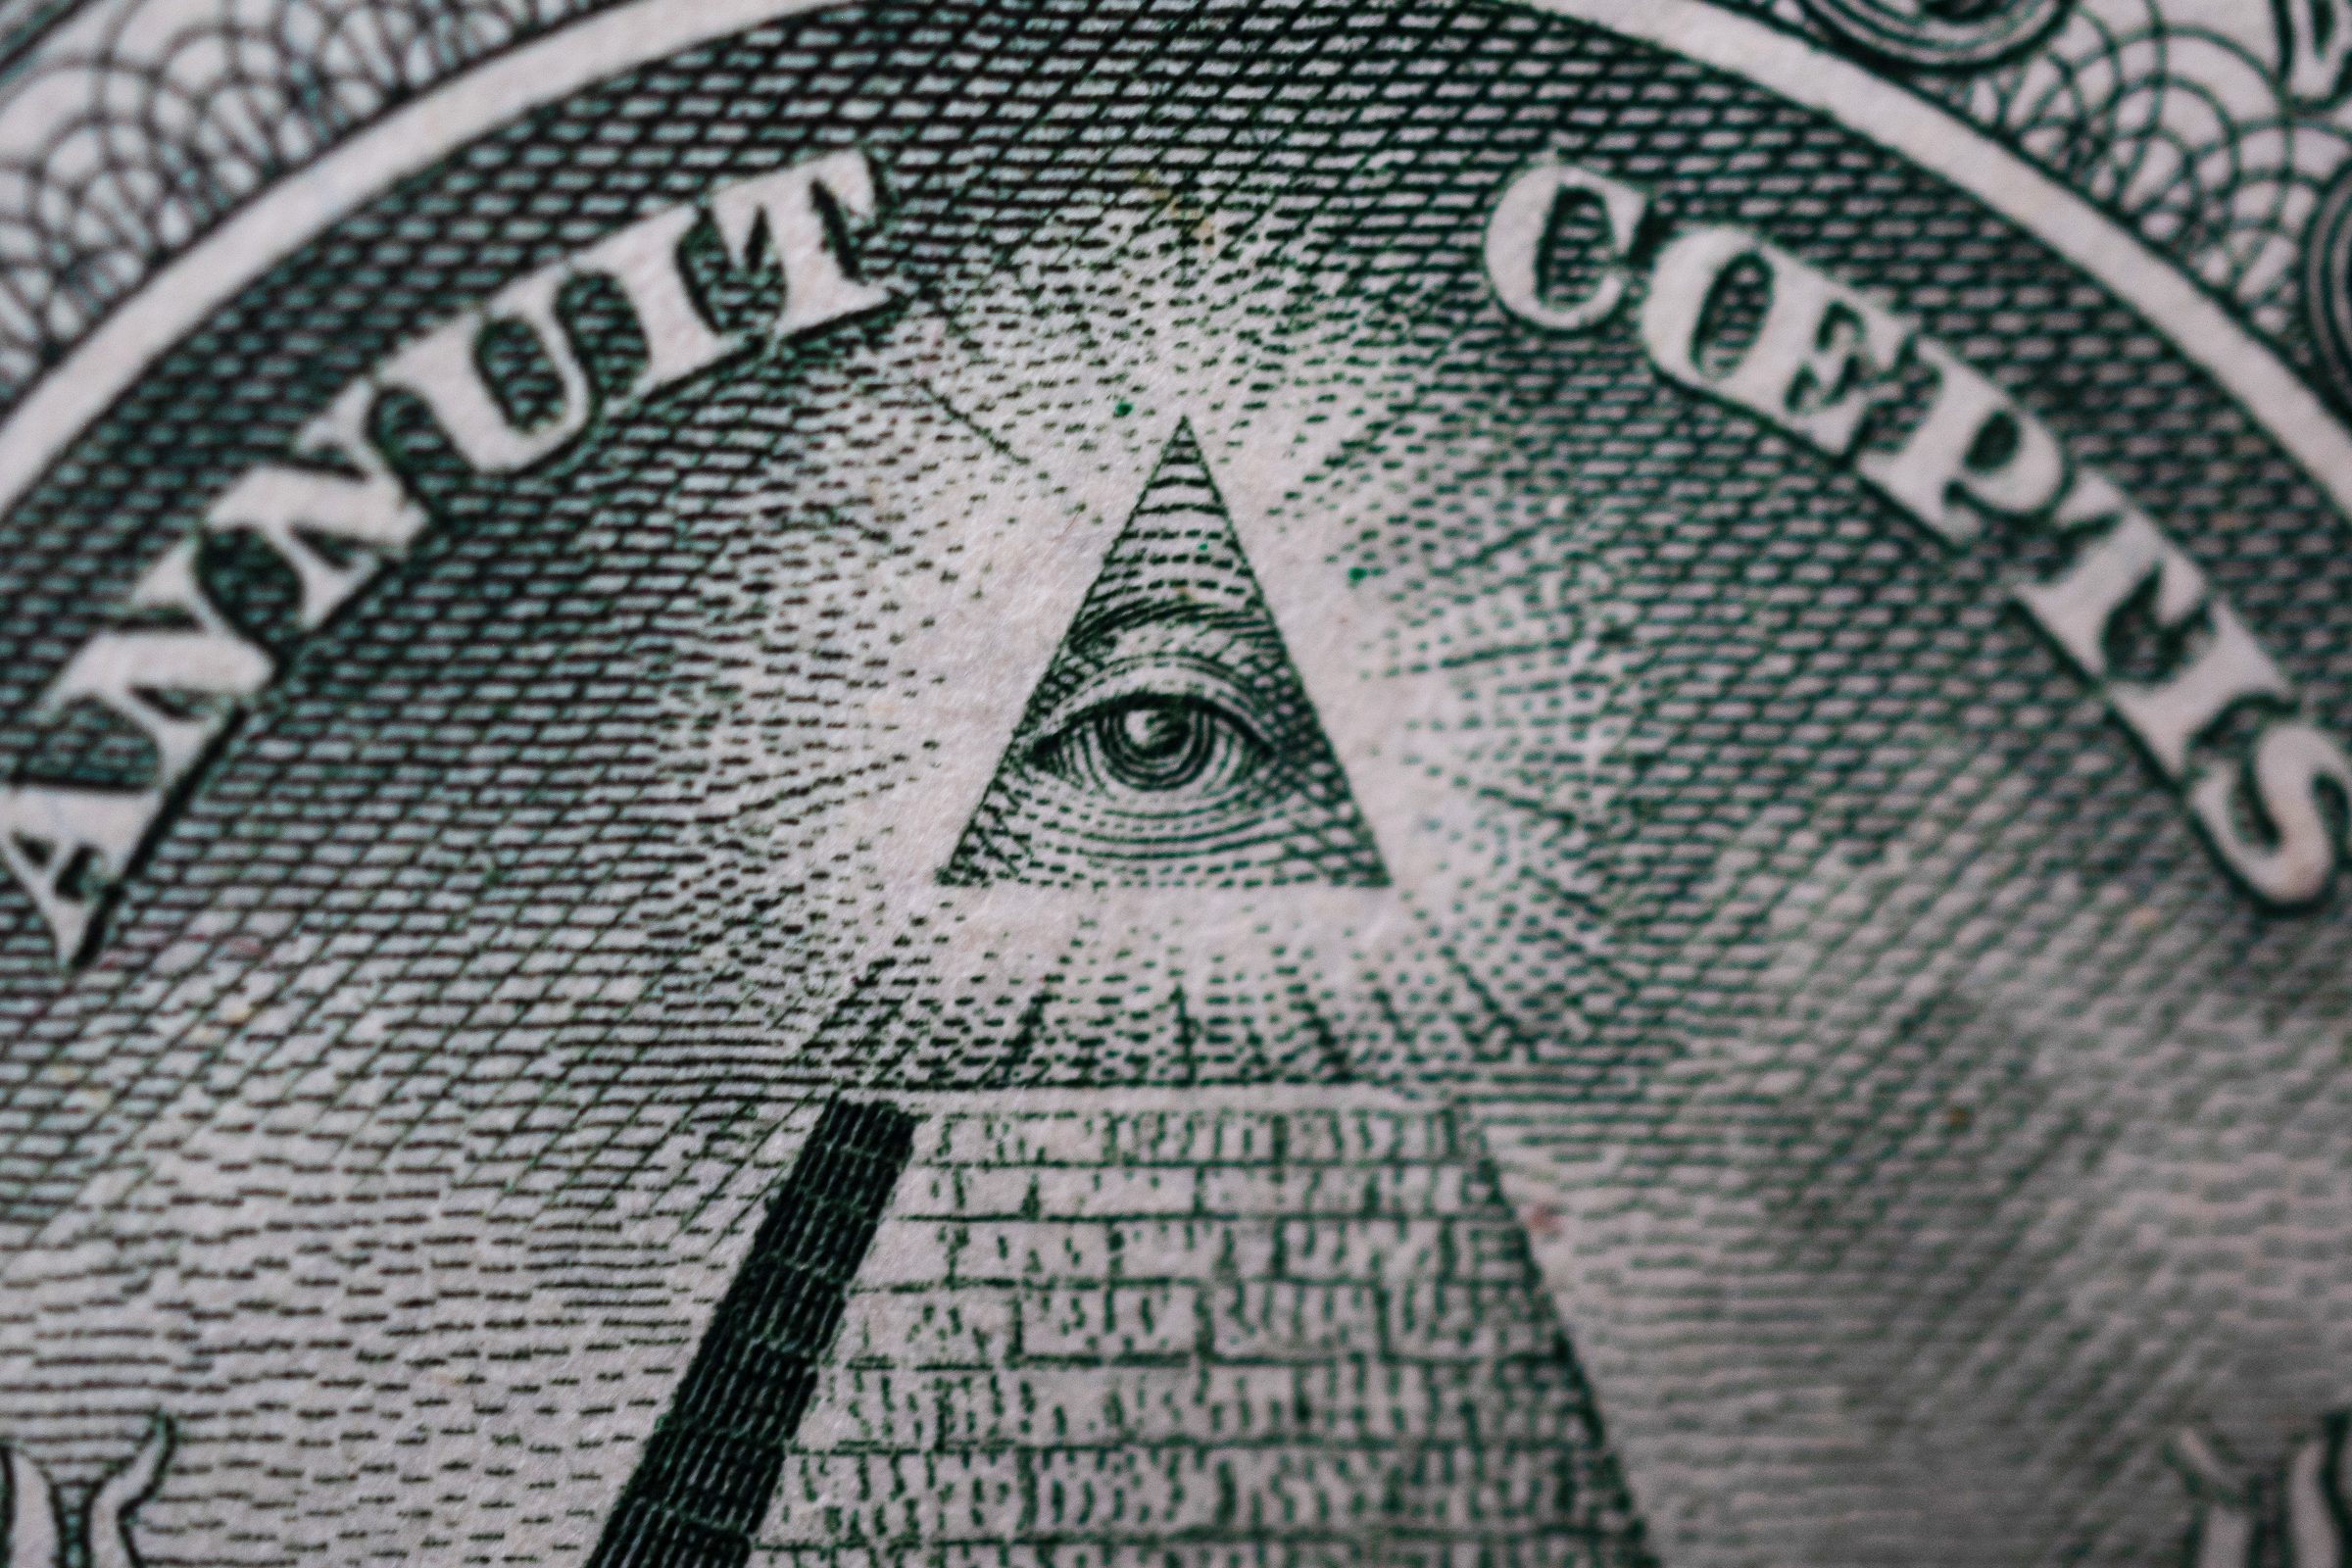 https://www.rd.com/wp-content/uploads/2019/11/eye-above-pyramid-dollar-bill-symbol.jpg?fit=700%2C467